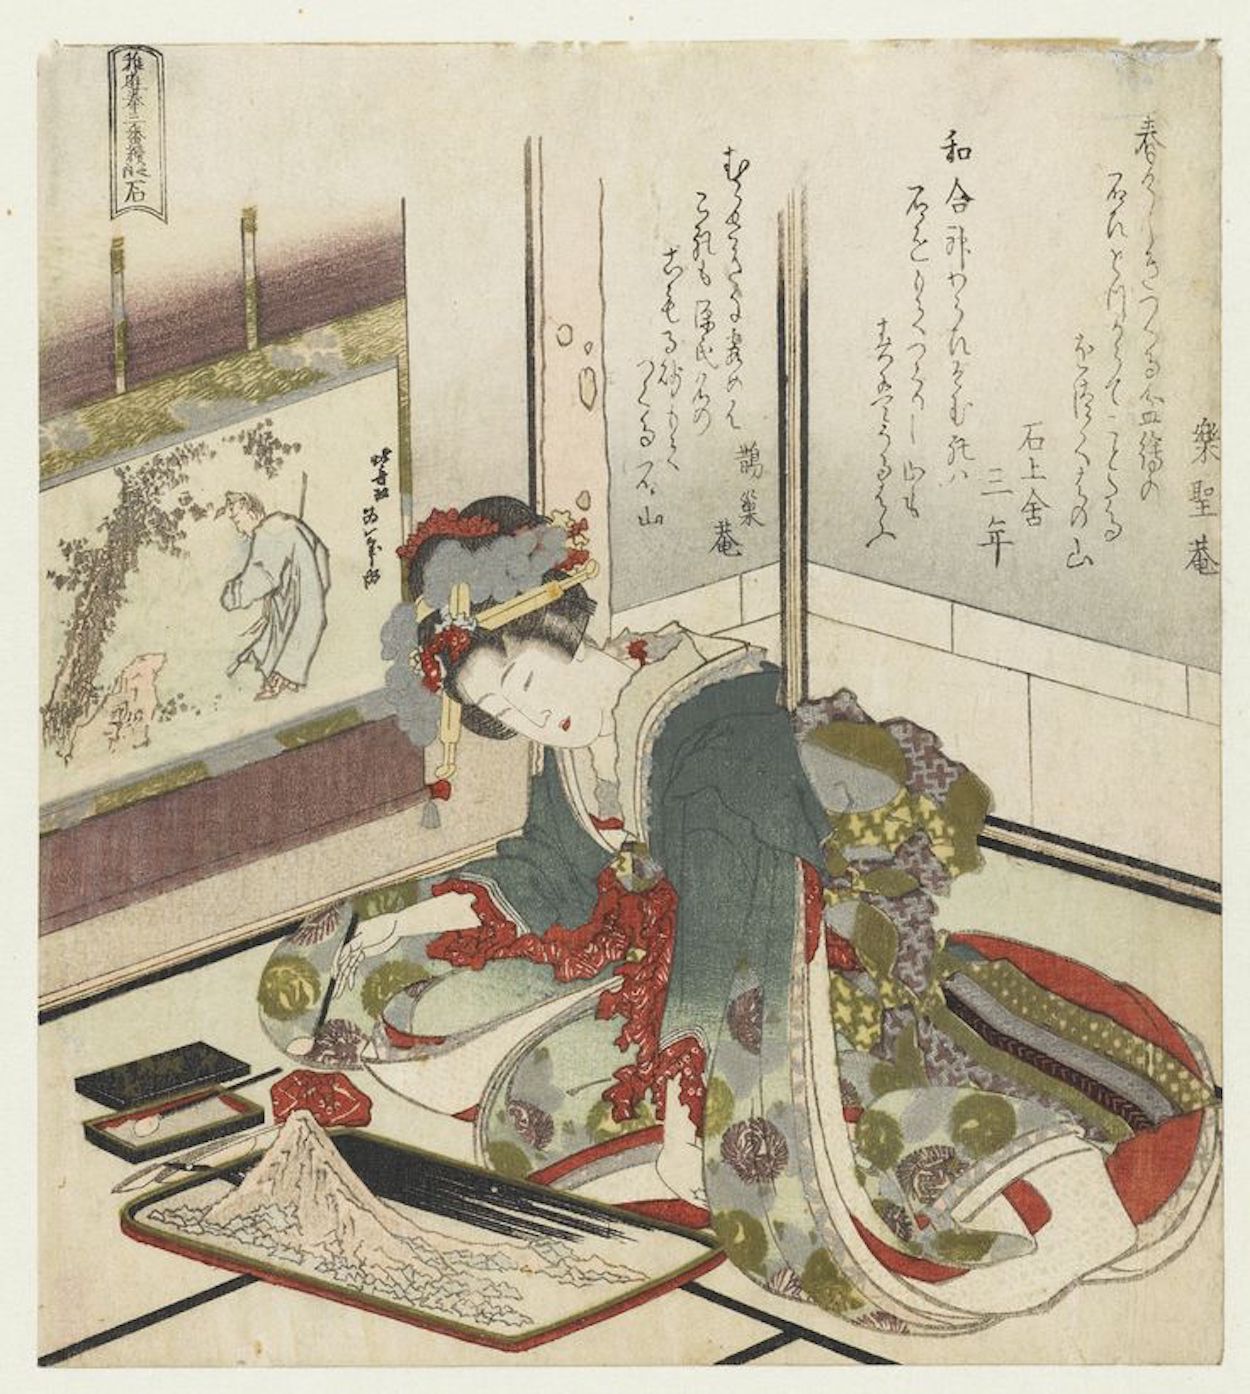 Stone by Katsushika Hokusai - 1823 private collection